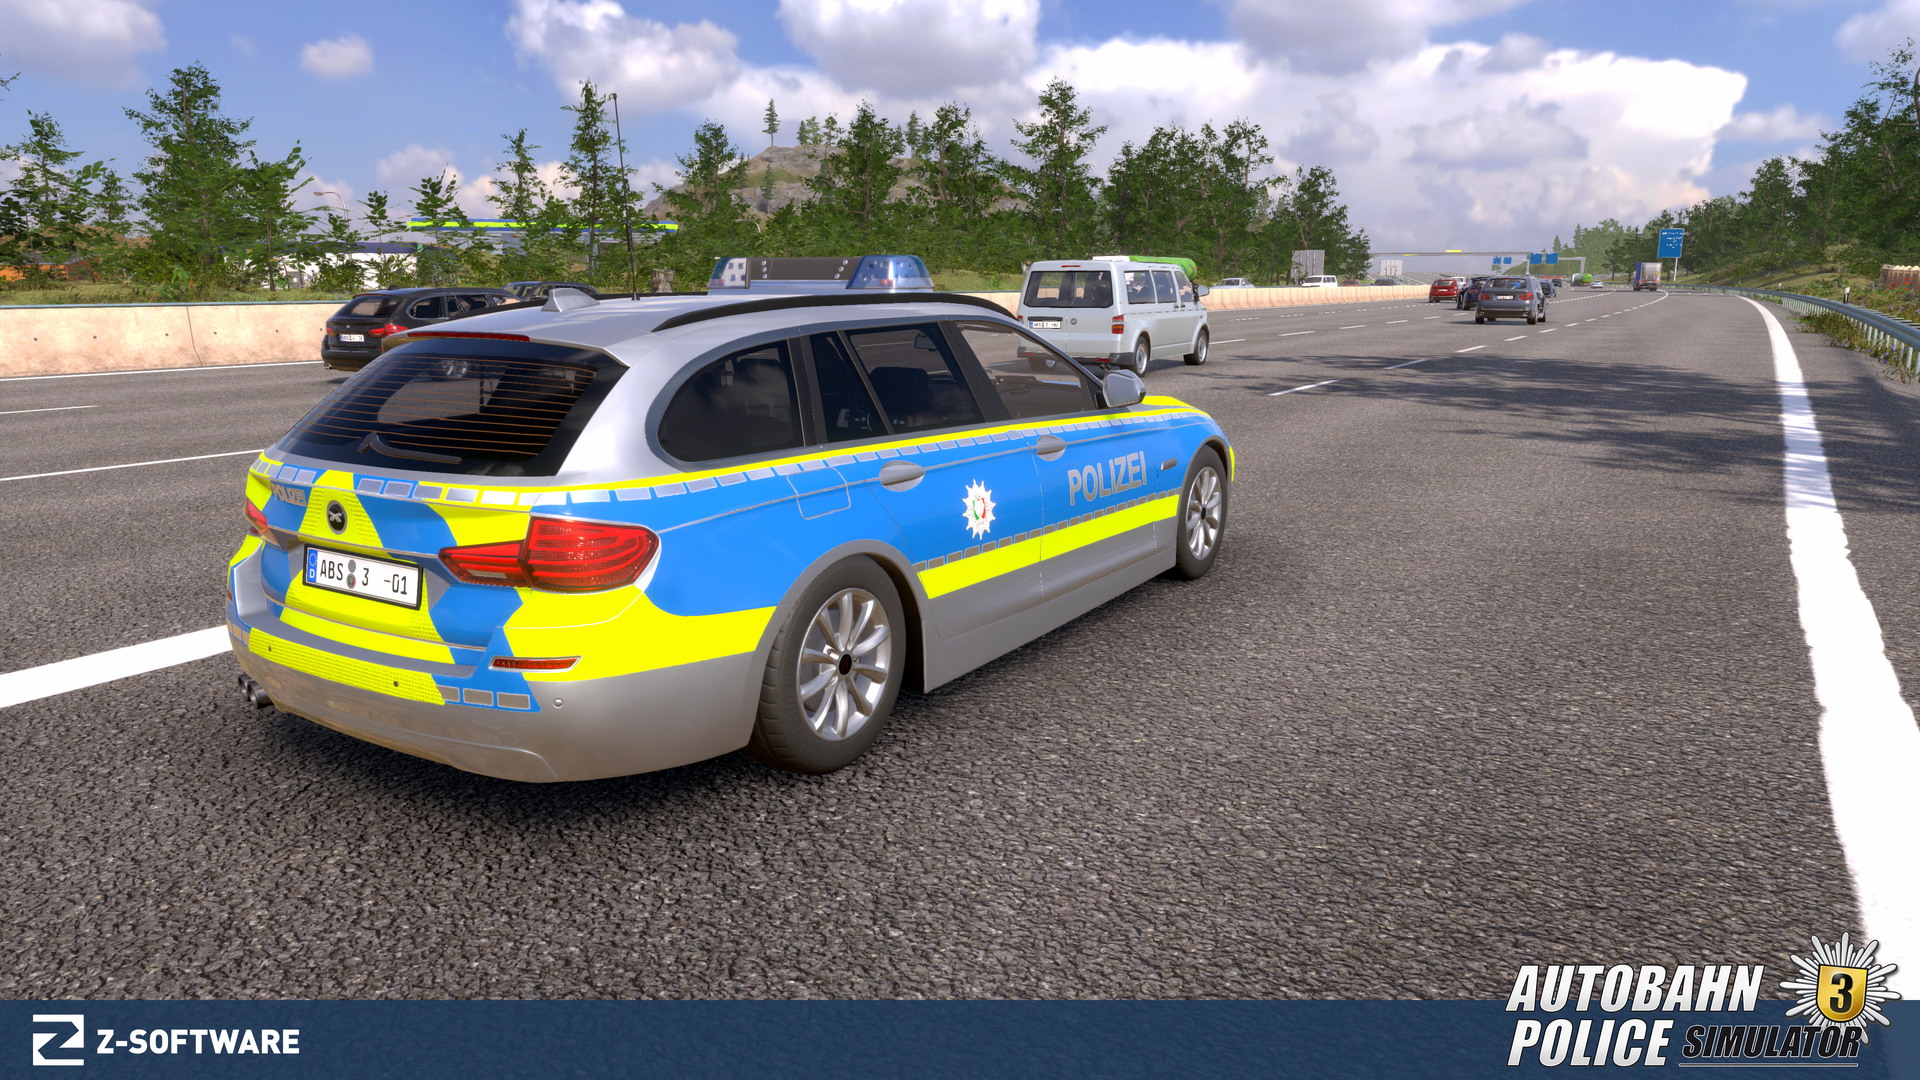 Autobahn Police Simulator 3 - screenshot 9